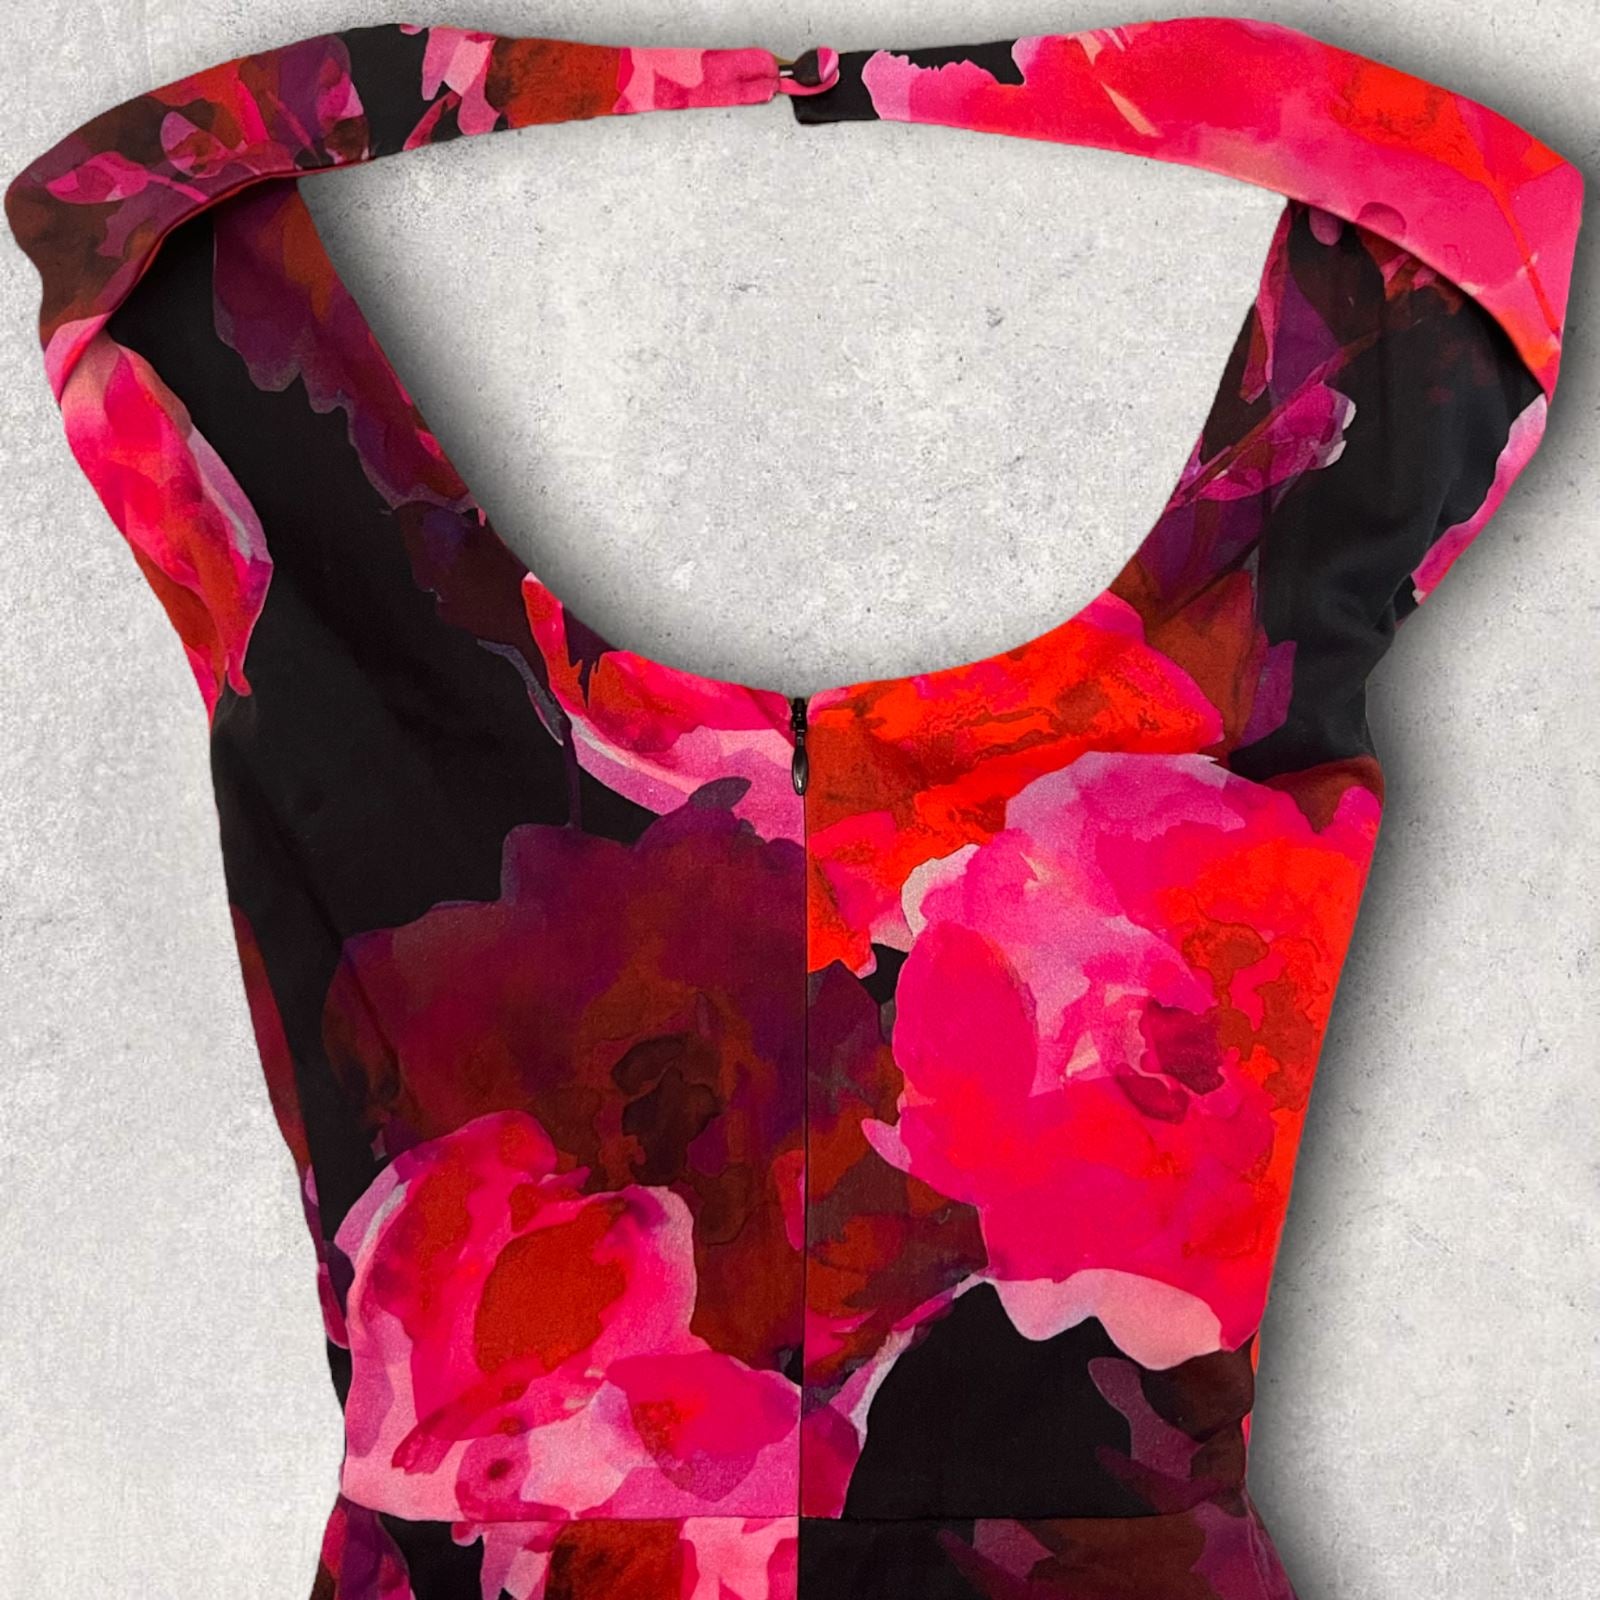 Phase Eight Pink & Black Floral Sleeveless Stretch Cotton Dress UK 14 US 10 EU 42 Timeless Fashions